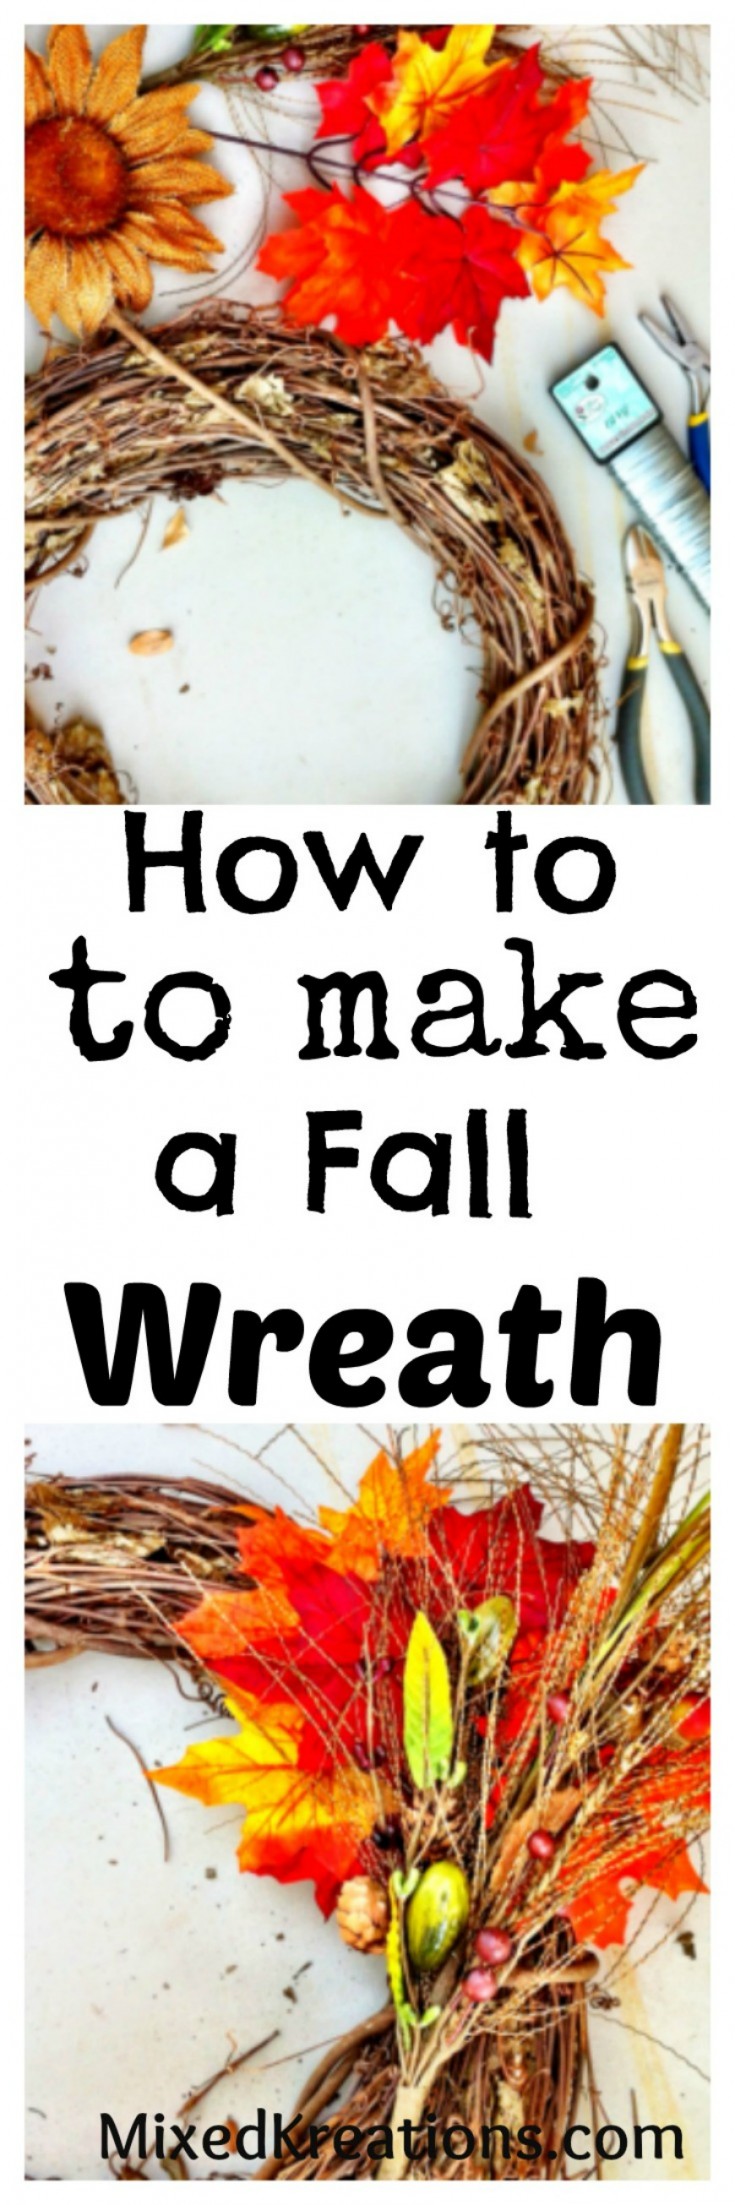 How to make a fall wreath